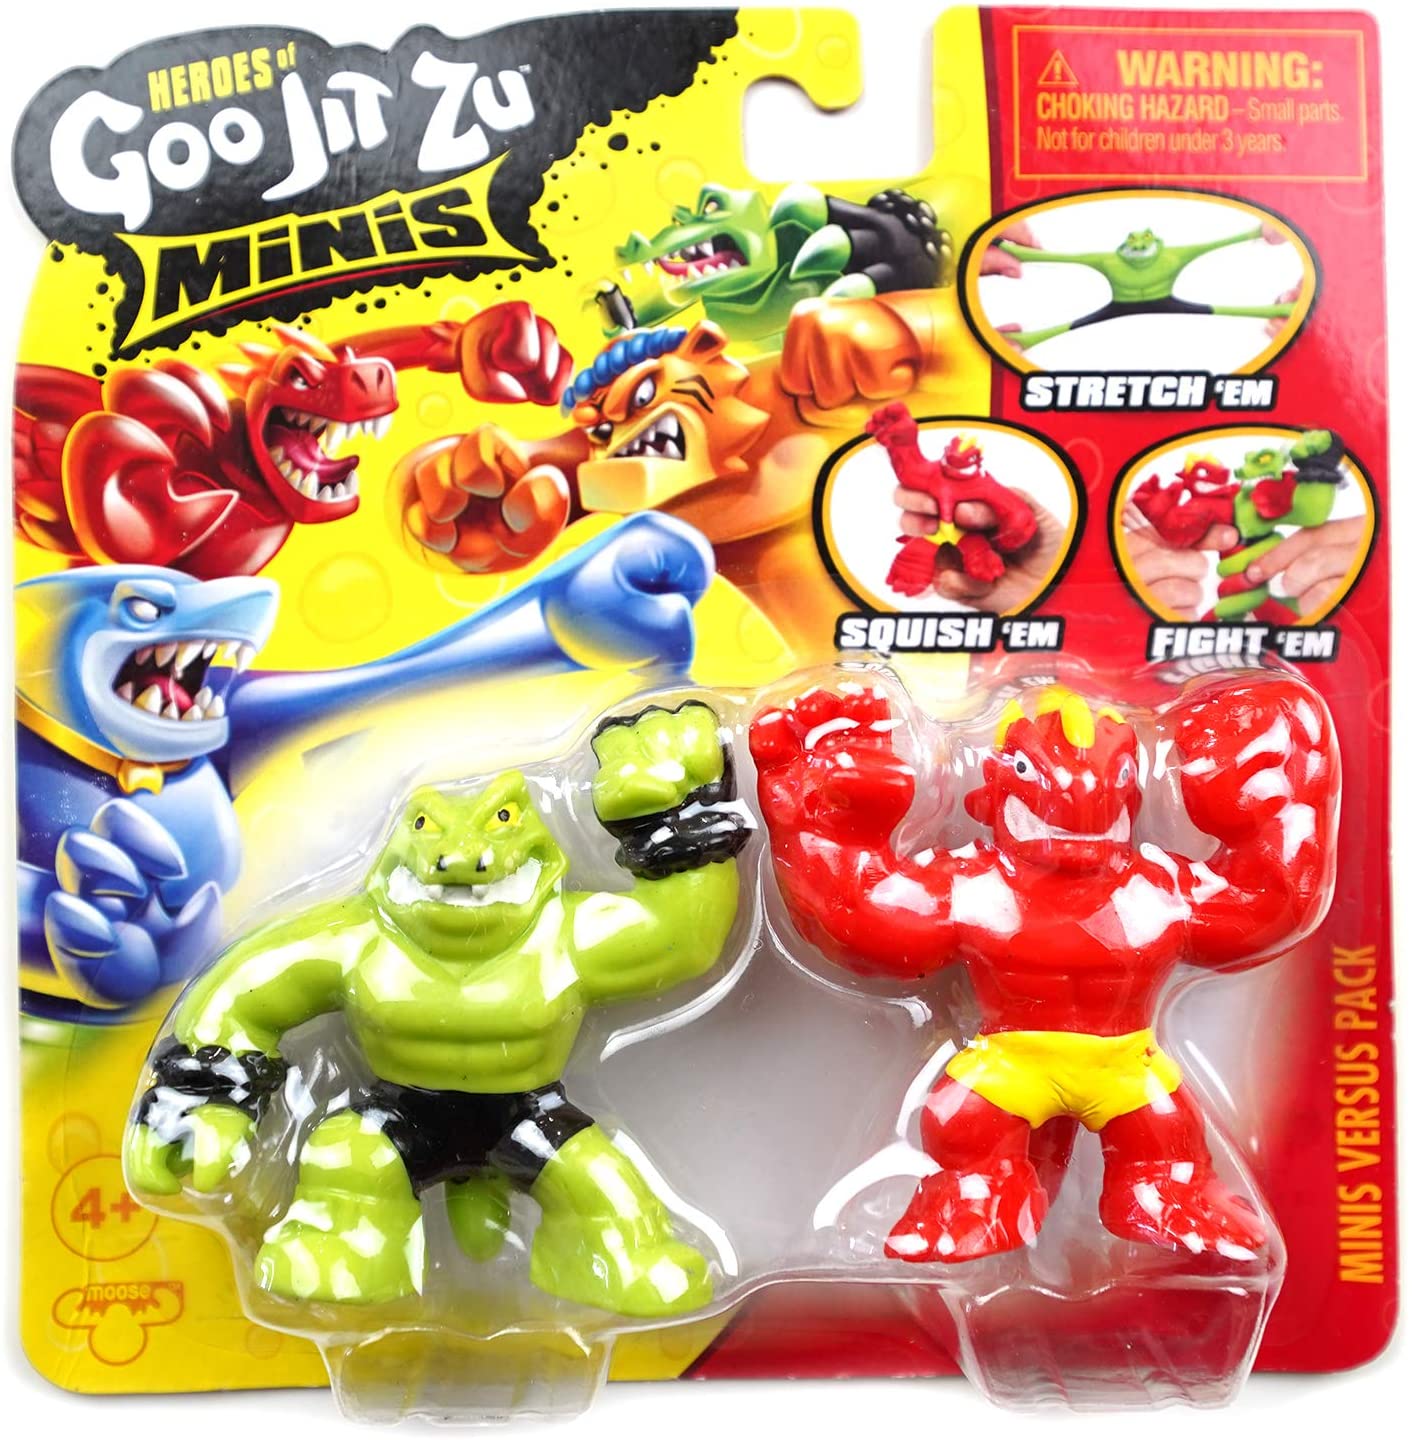 Action Figure Blazagon vs Rock Jaw: Heroes of Goo Jit Zu Minis - Sunny